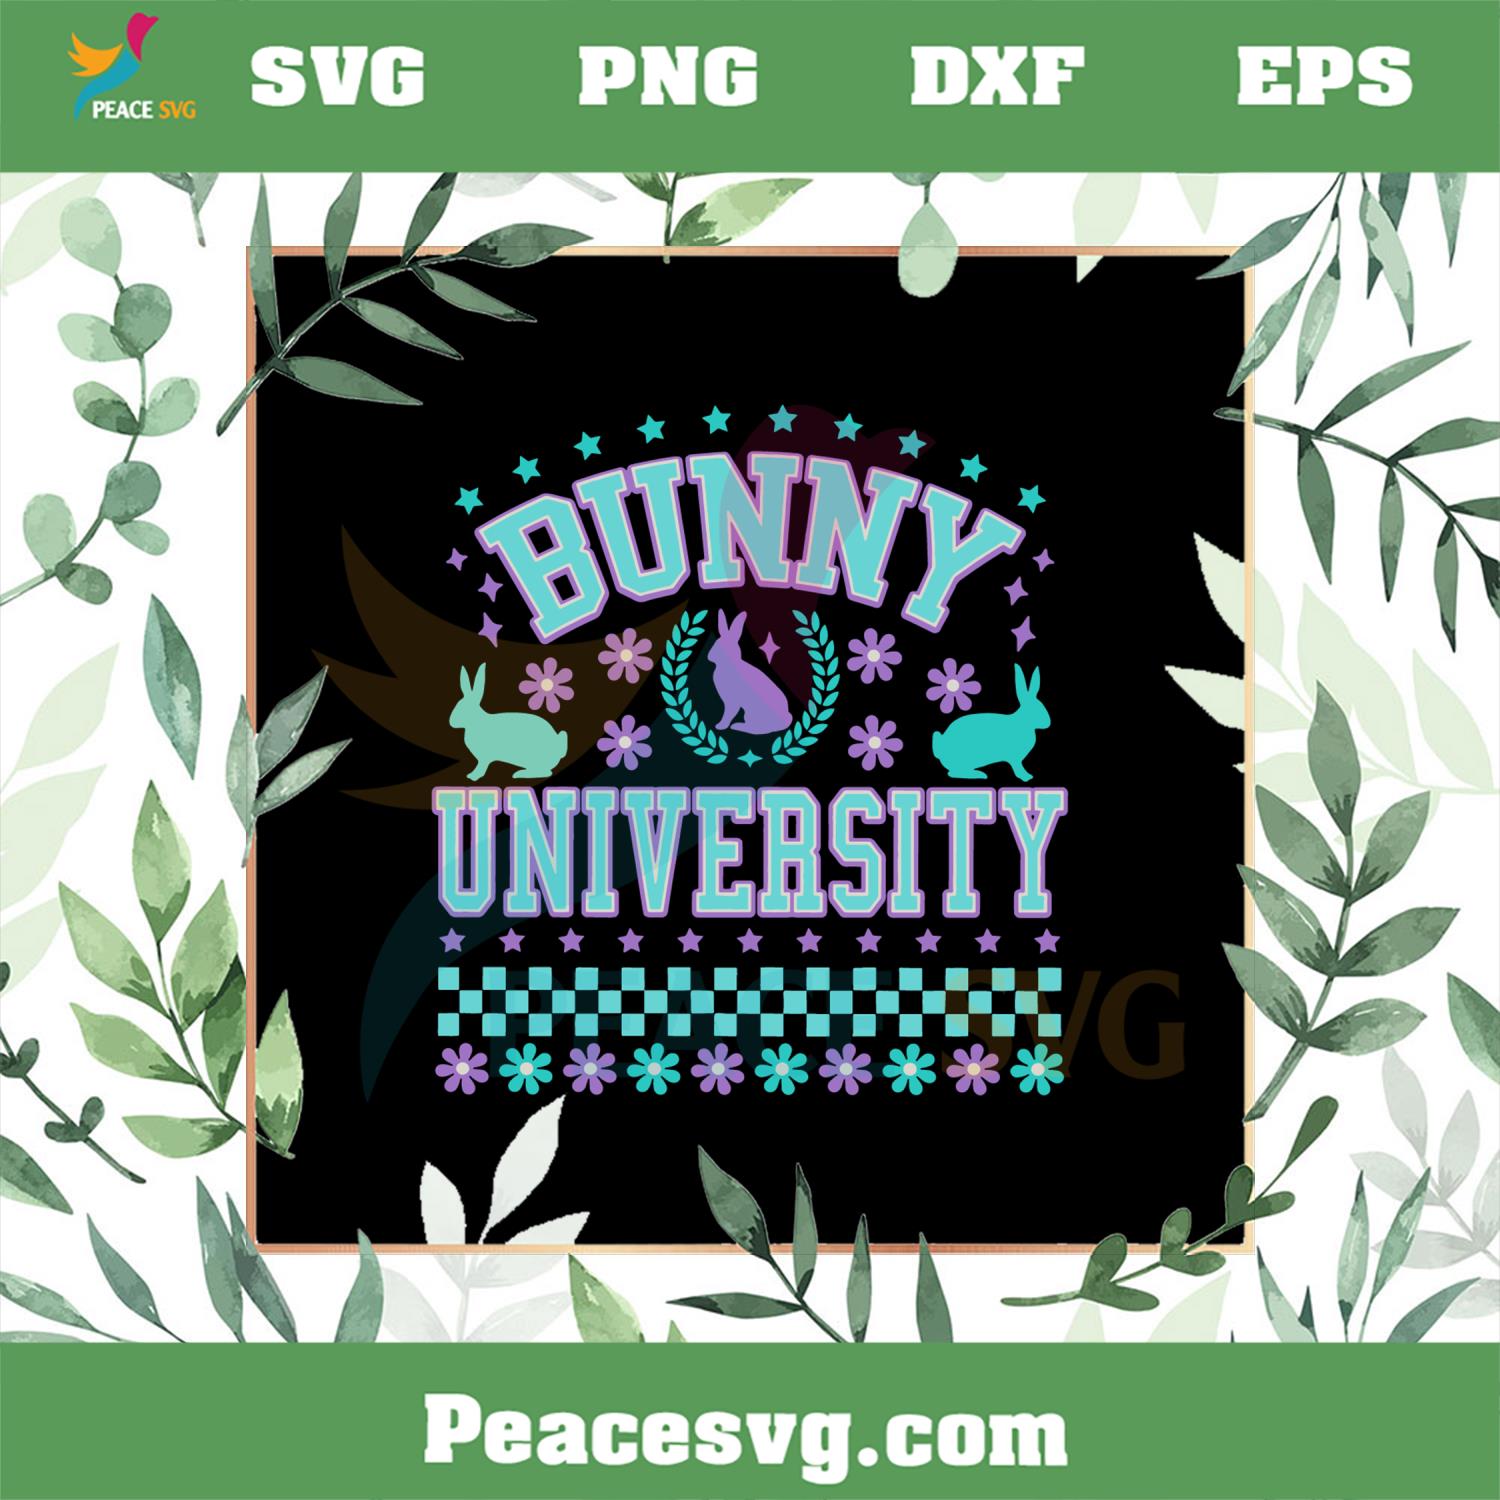 Bunny University Happy Easter Bunny Best SVG Cutting Digital Files